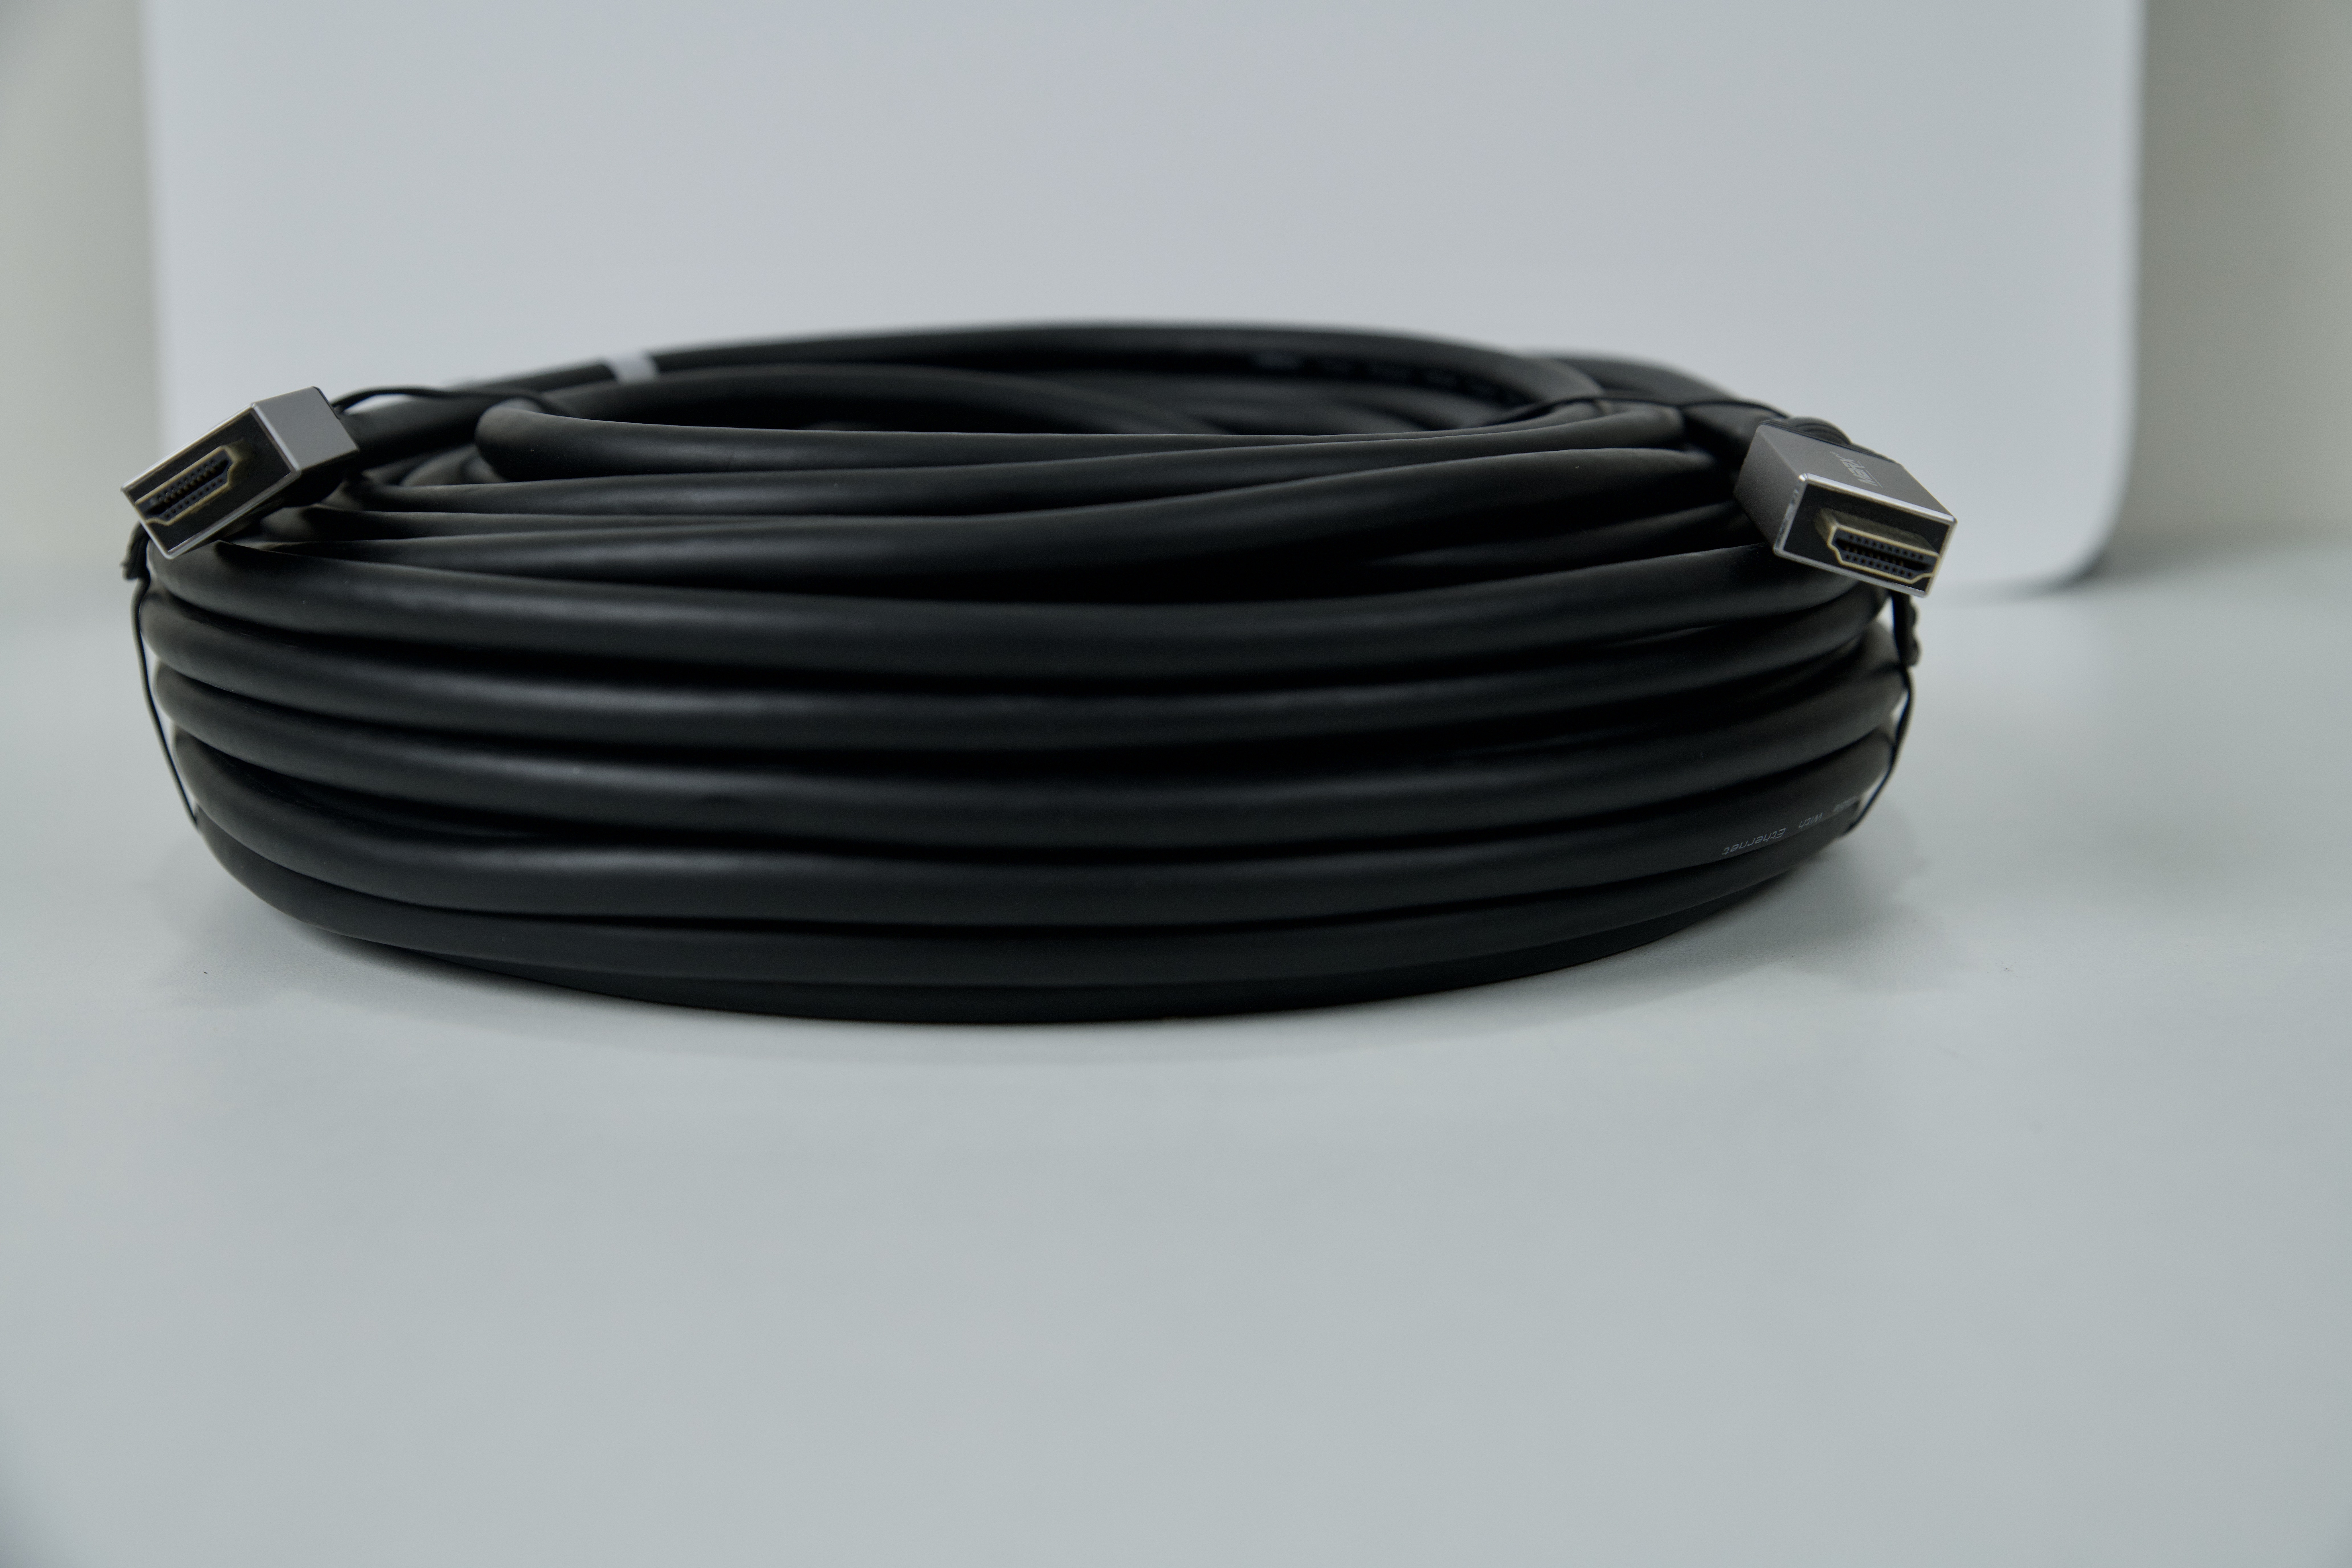 MARX HDMI 1.4v 15m Cable